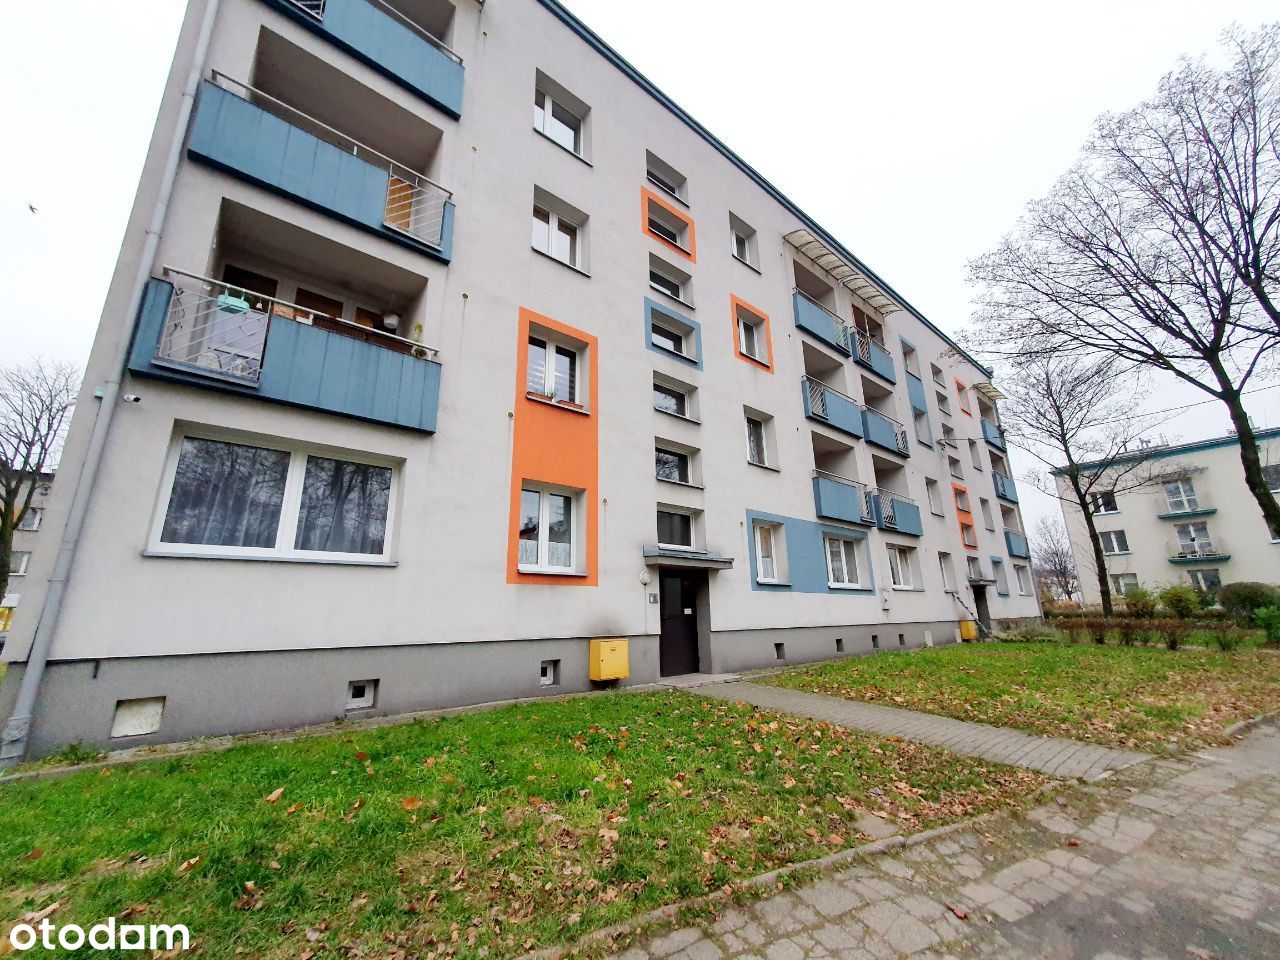 Sosnowiec Pogoń Niski Blok 47m 2 Pokoje + Balkon